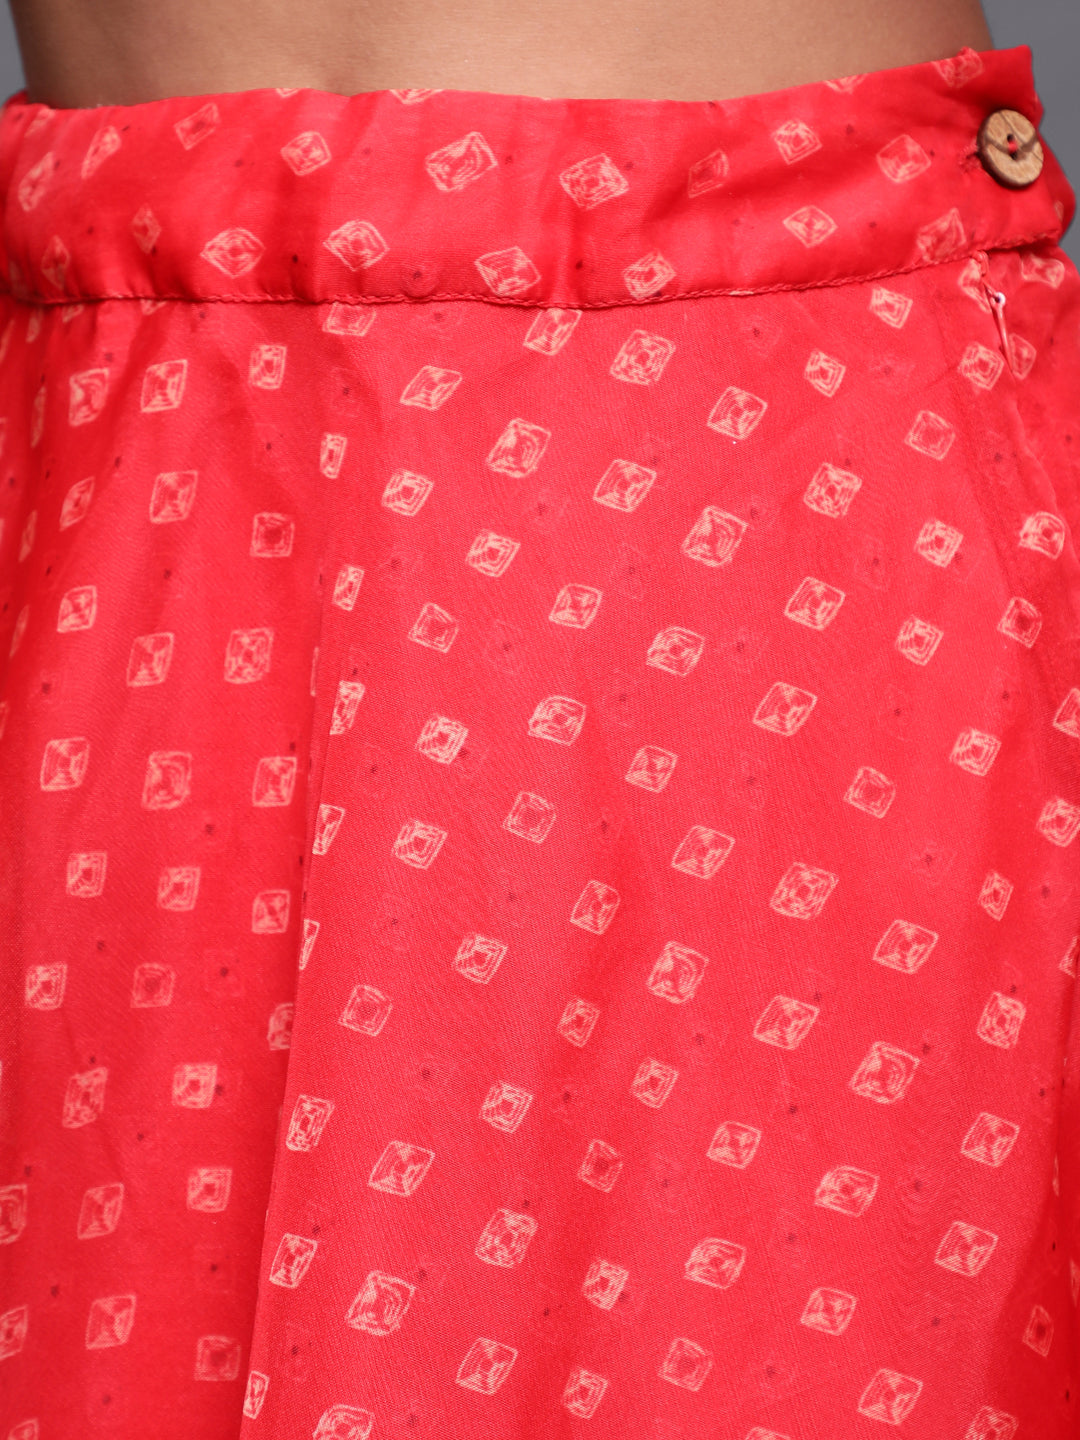 Red Digital Print Lehenga Choli With Jacket